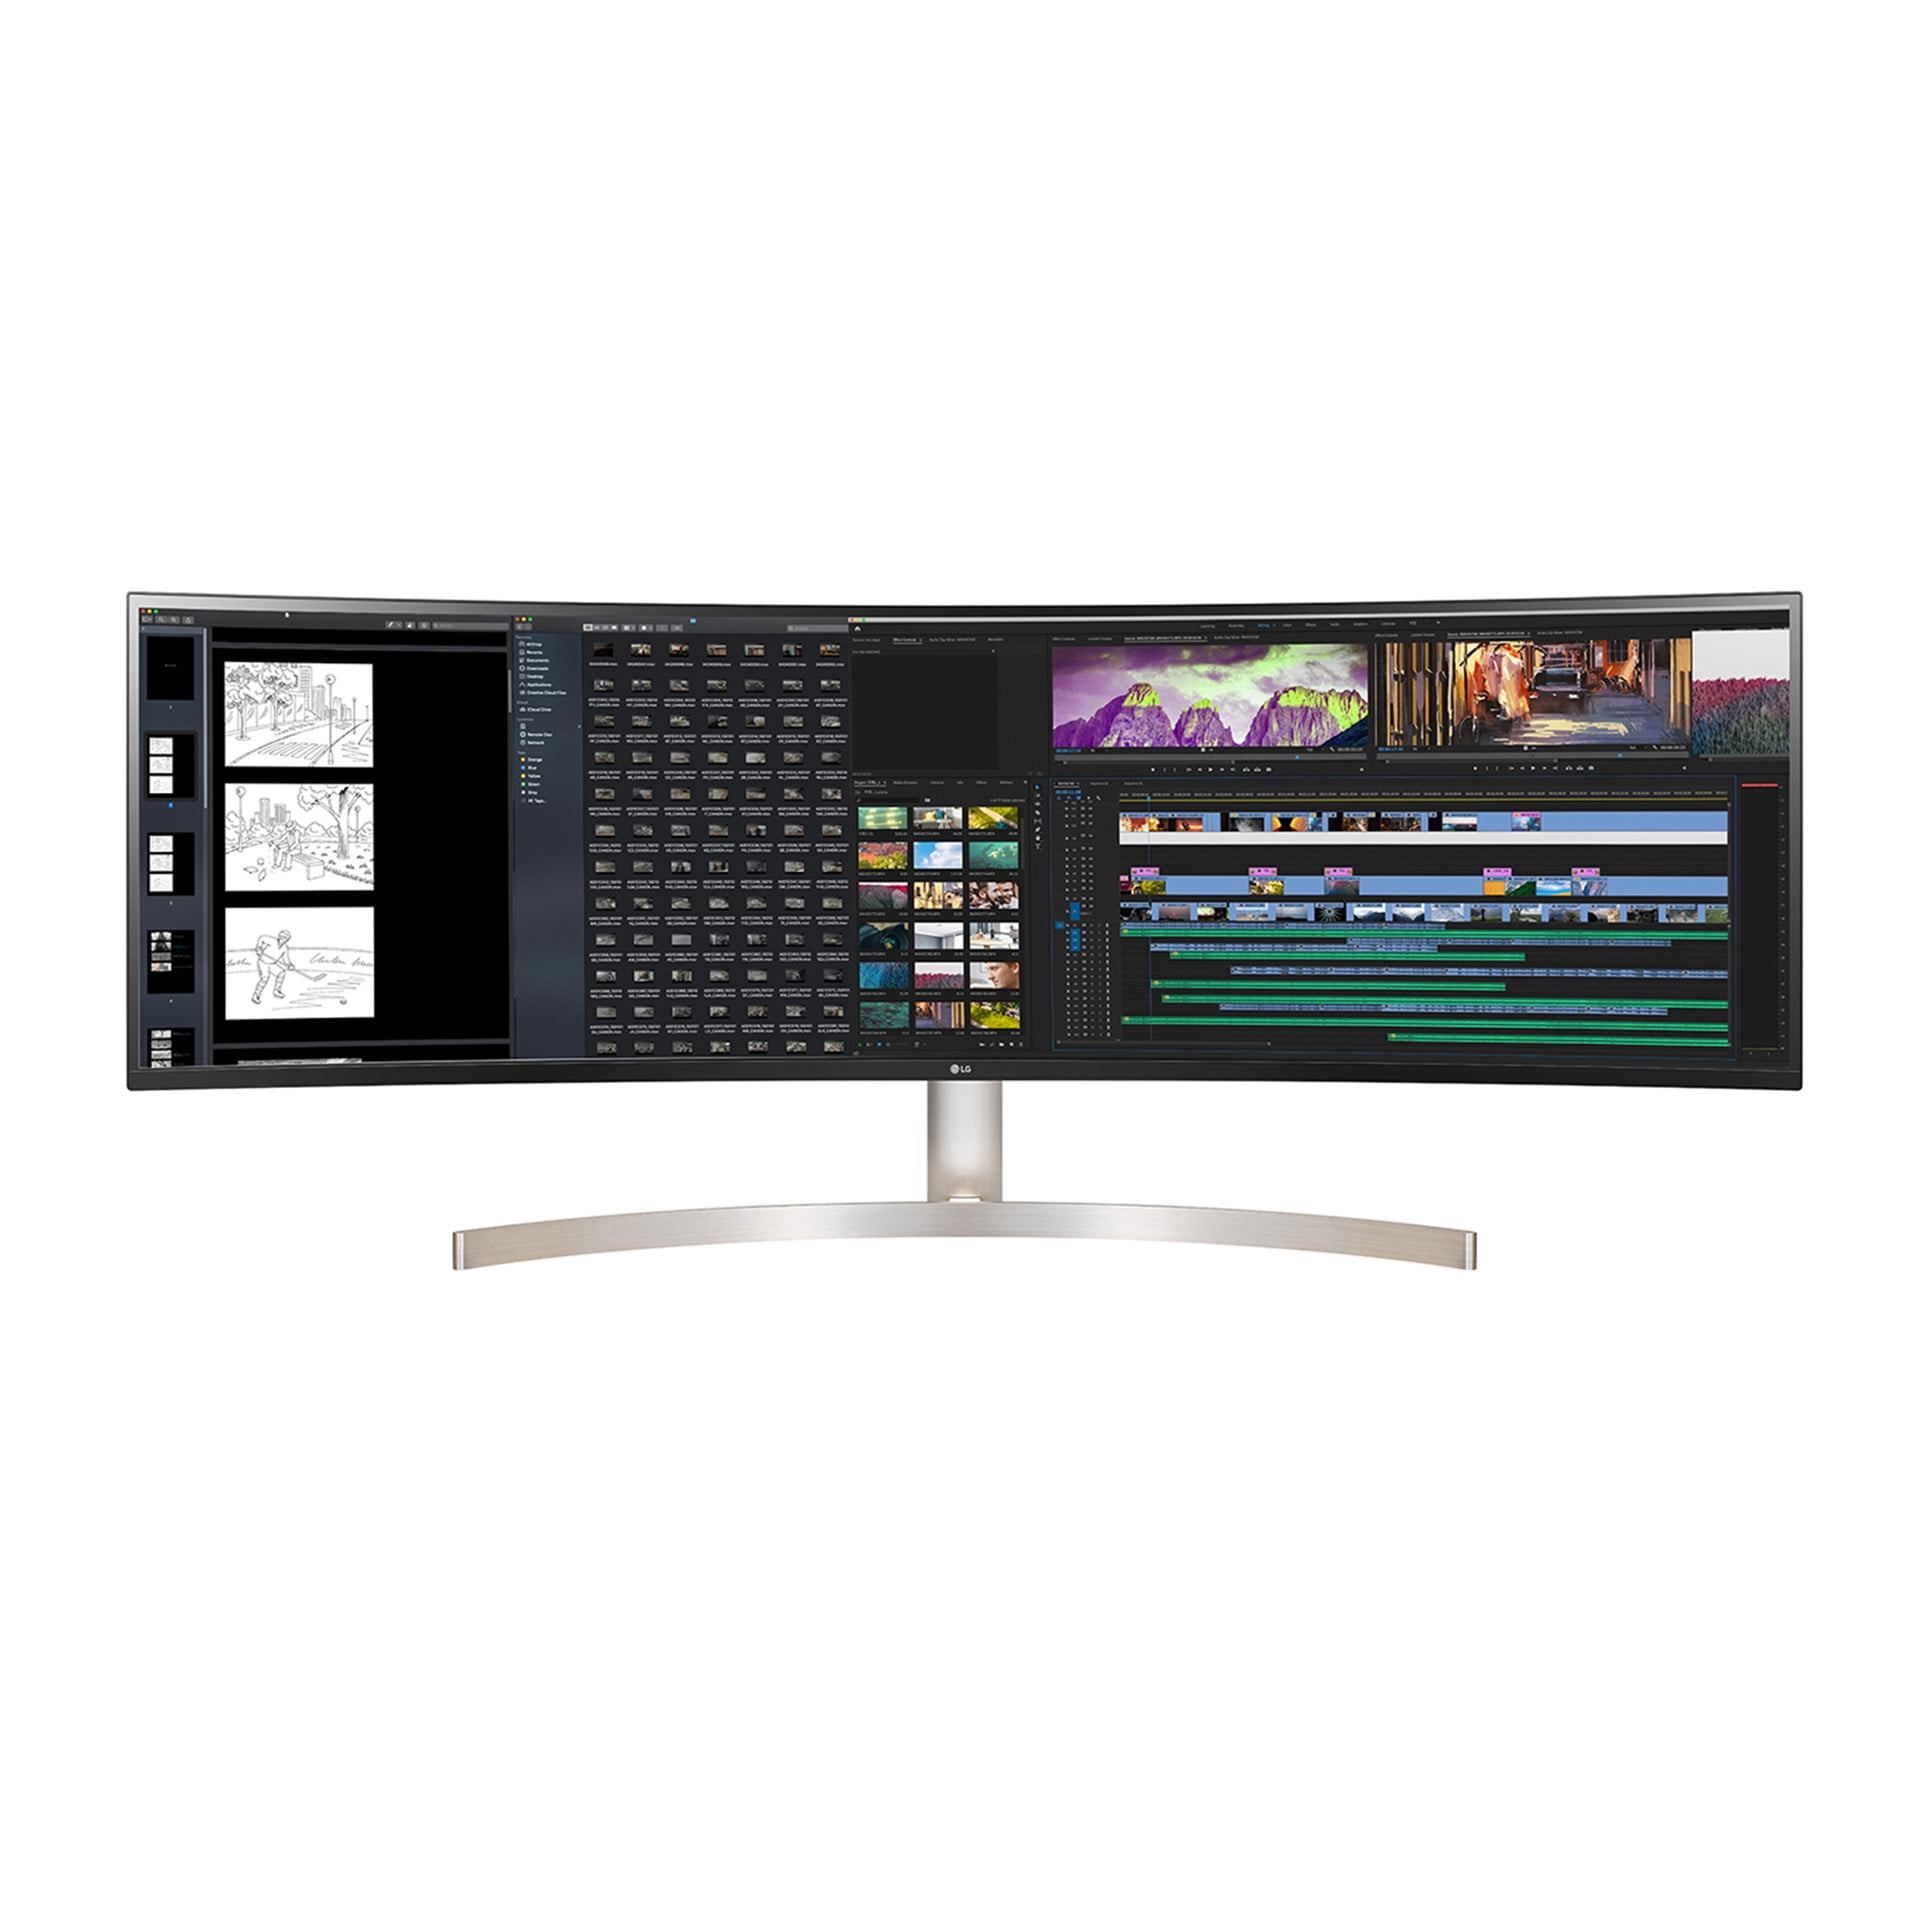 LG UltraGear 34GN850-B 34´´ 4K LED 144Hz Gaming Monitor Black